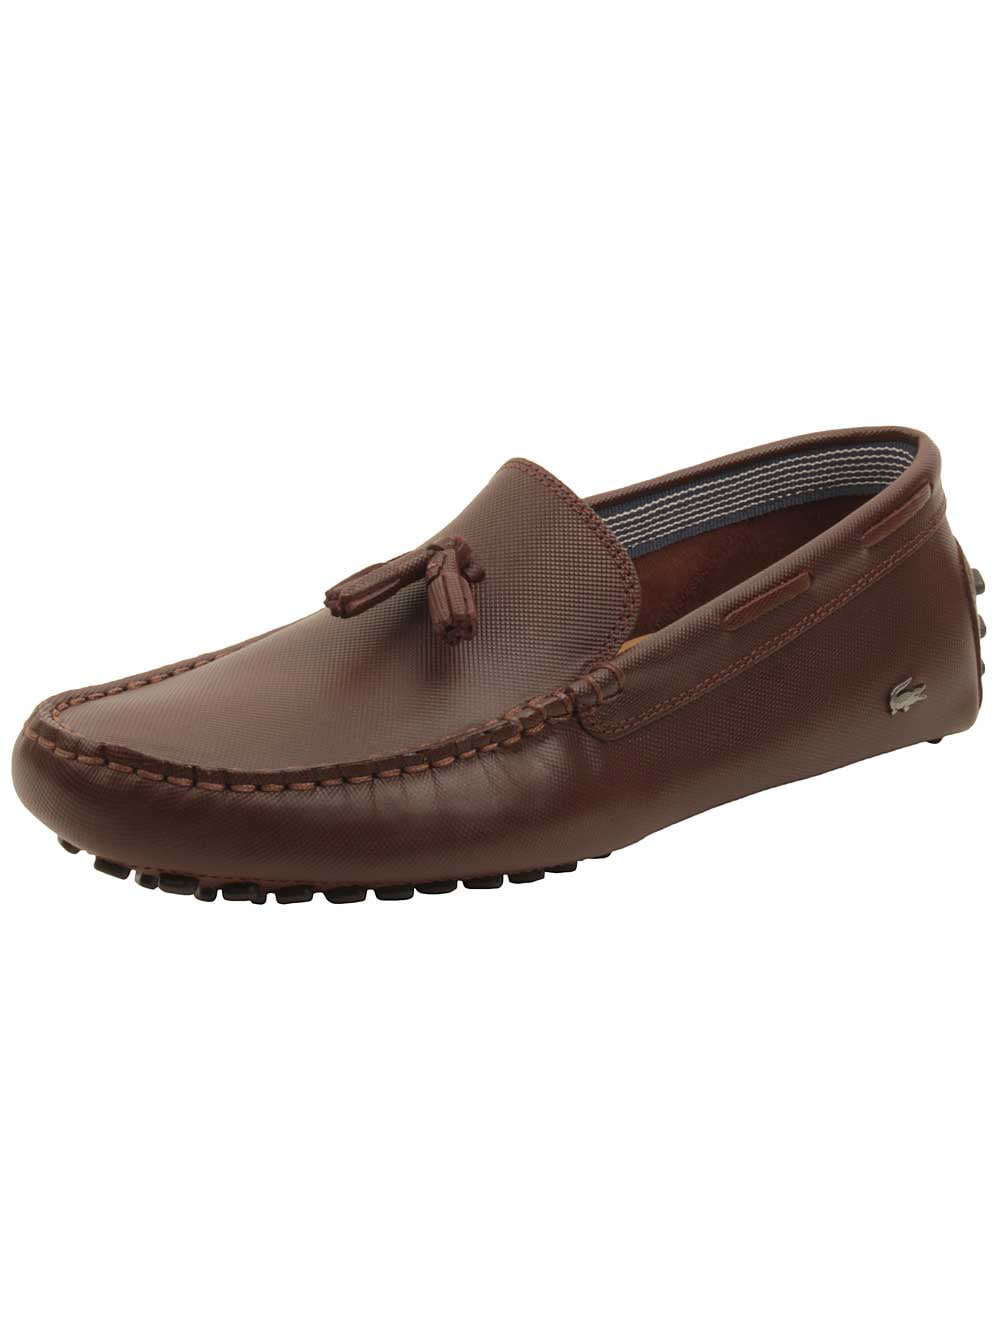 Lacoste Mens Concours Tassle 8 Loafers in Dark - Walmart.com